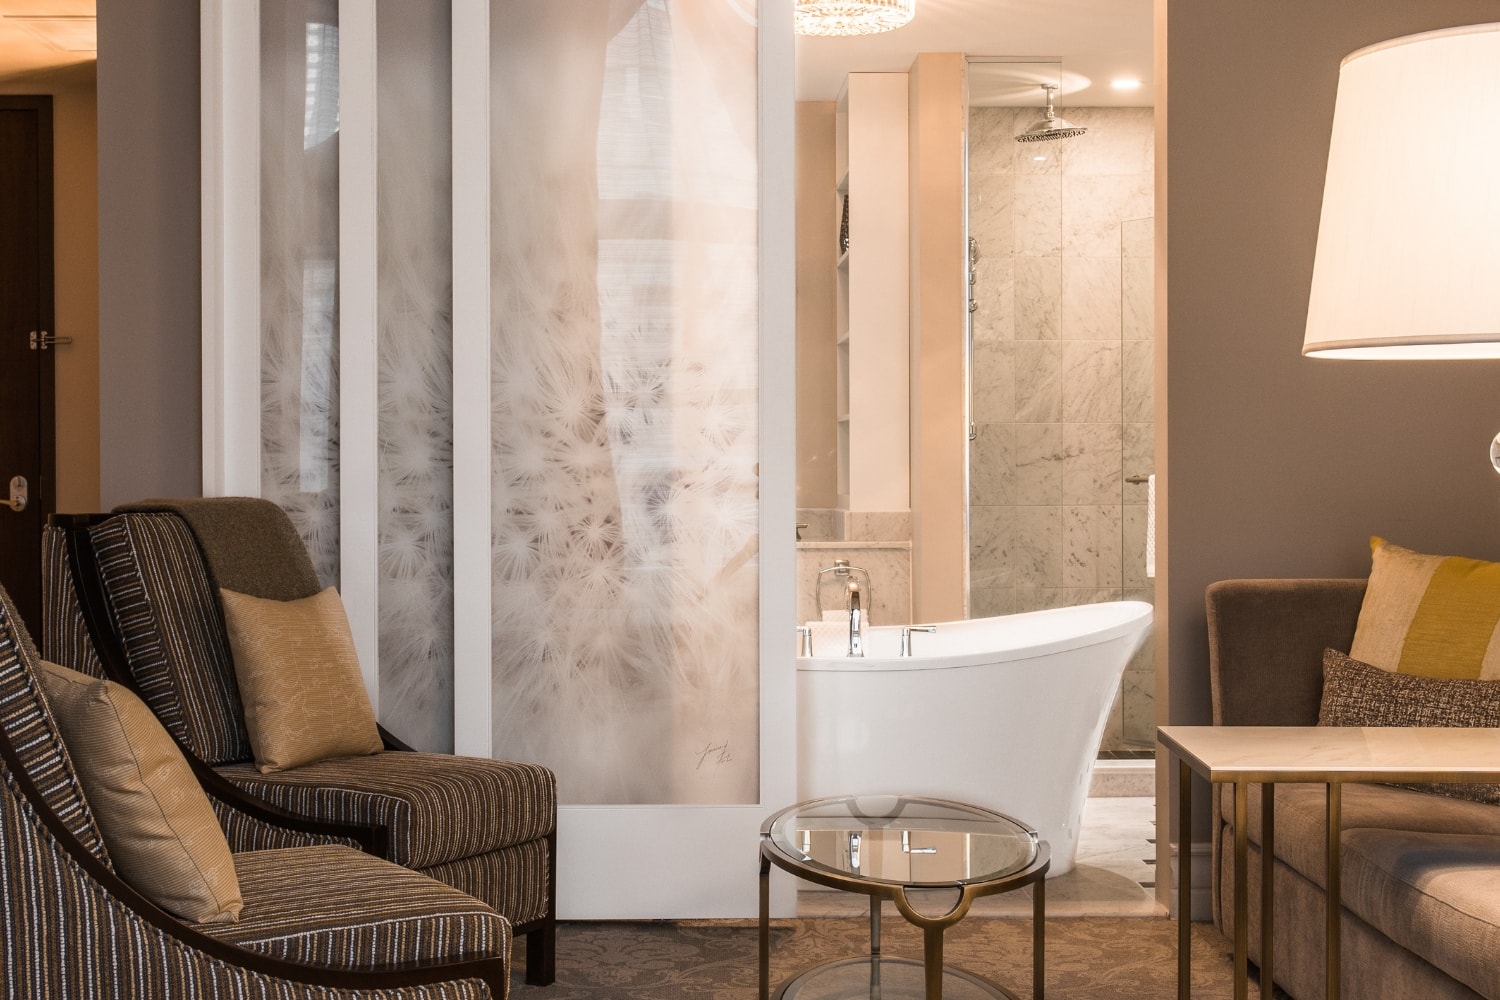 Hotel Birks Montreal luxury hotels in montreal bathroom